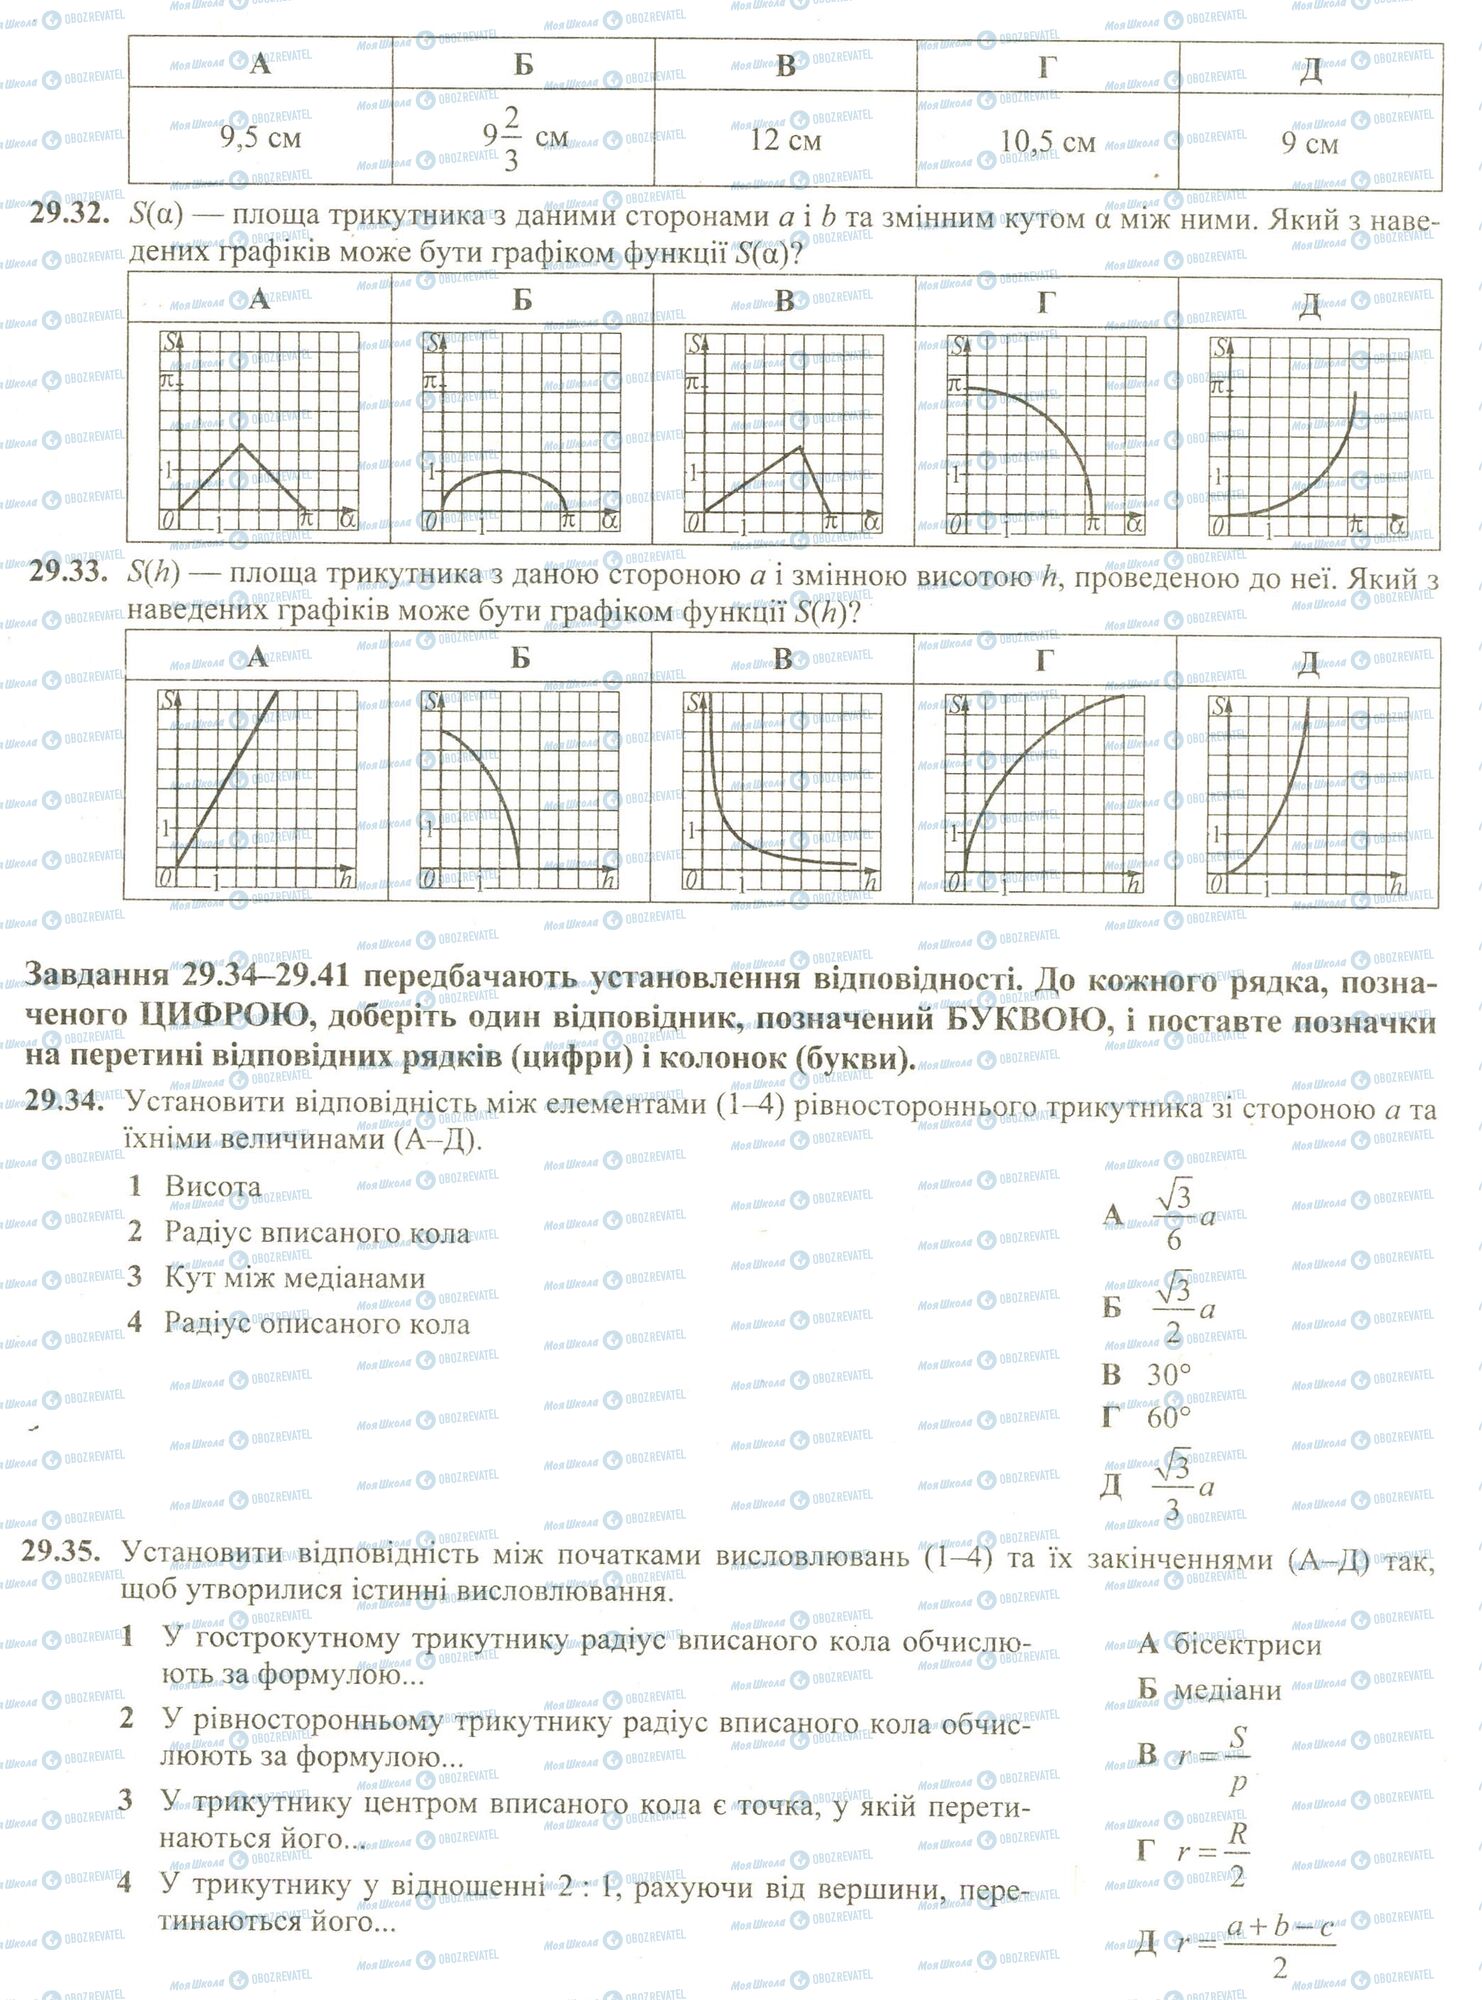 ЗНО Математика 11 класс страница 32-35